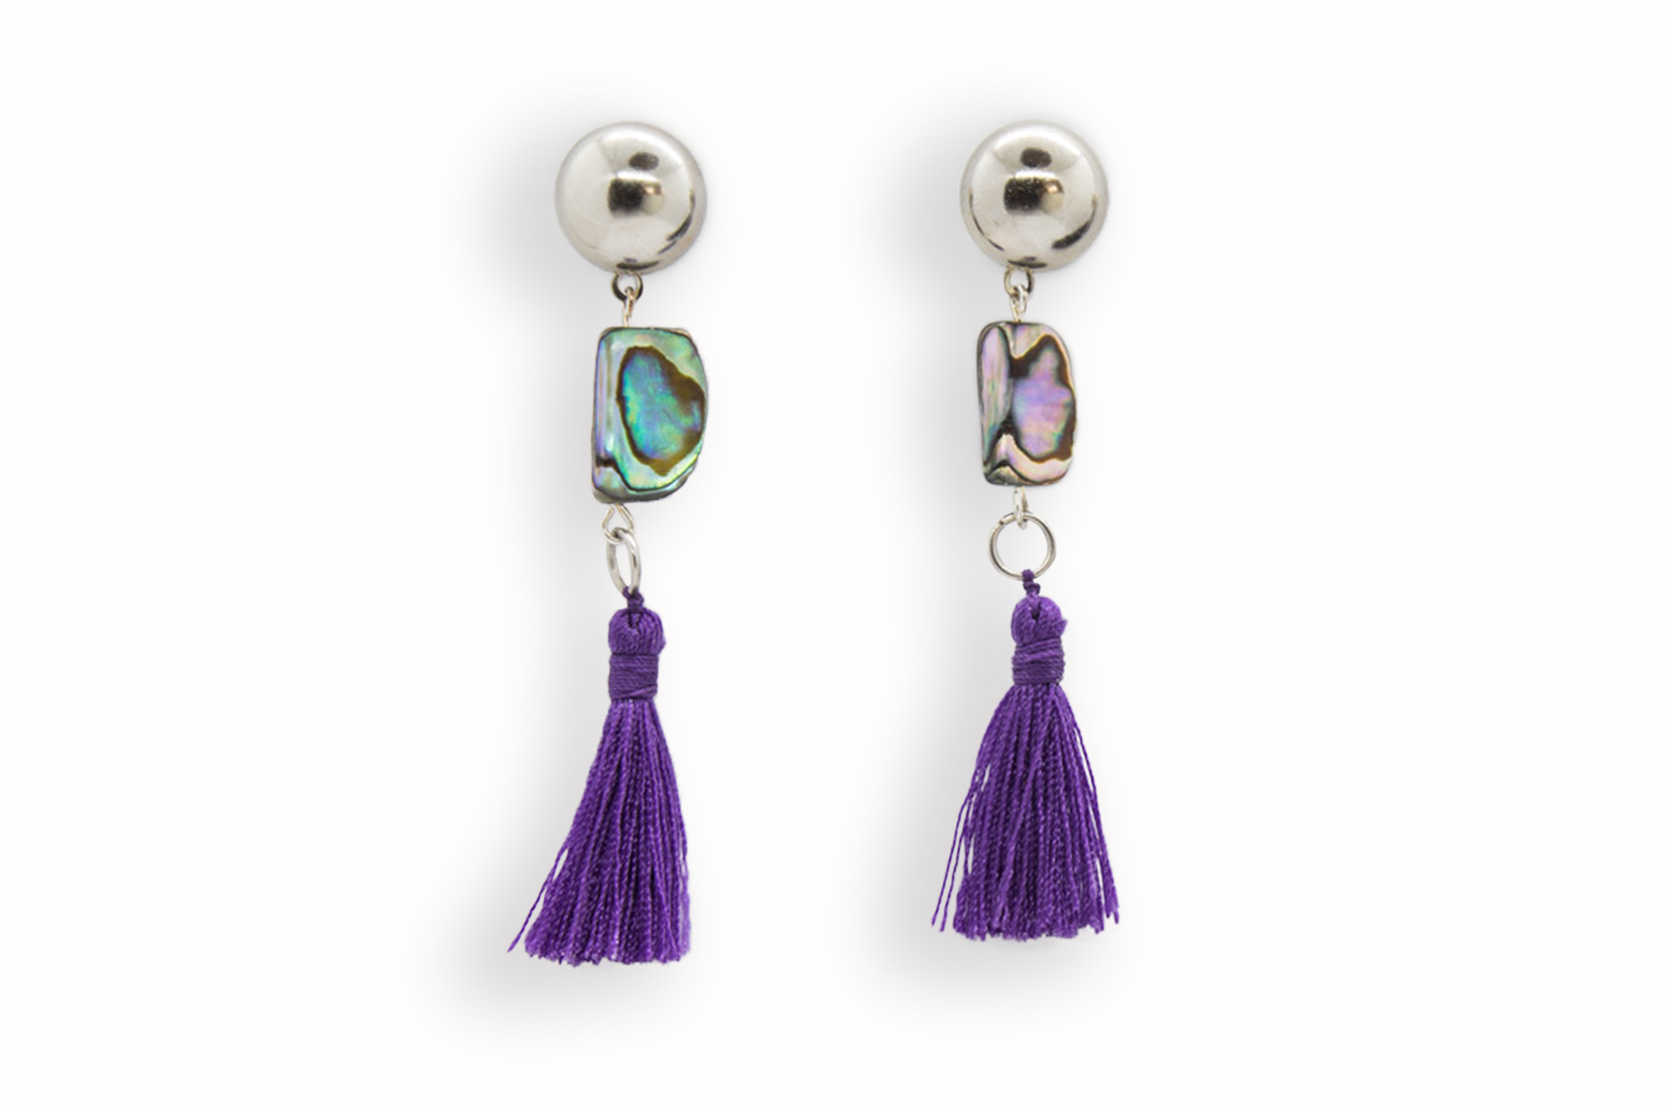 Buy Bohemian Tribal Dhol Earrings-ER091 at Amazon.in